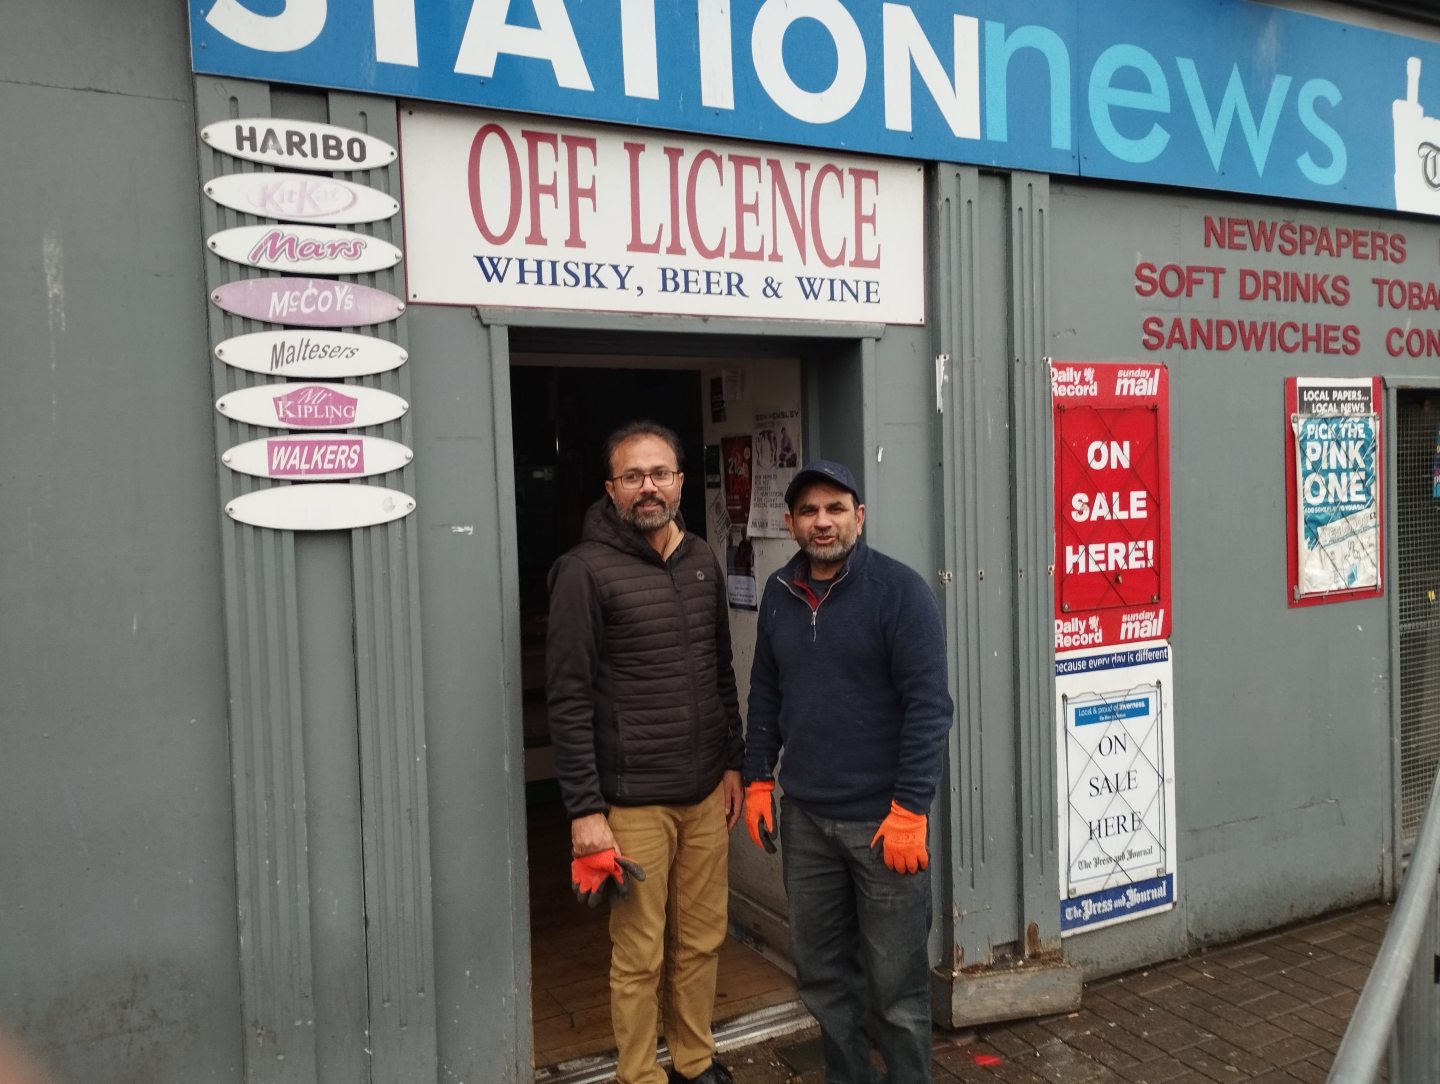 Owner Munawar Ahmad outside Station News with employee Omar Aziz.